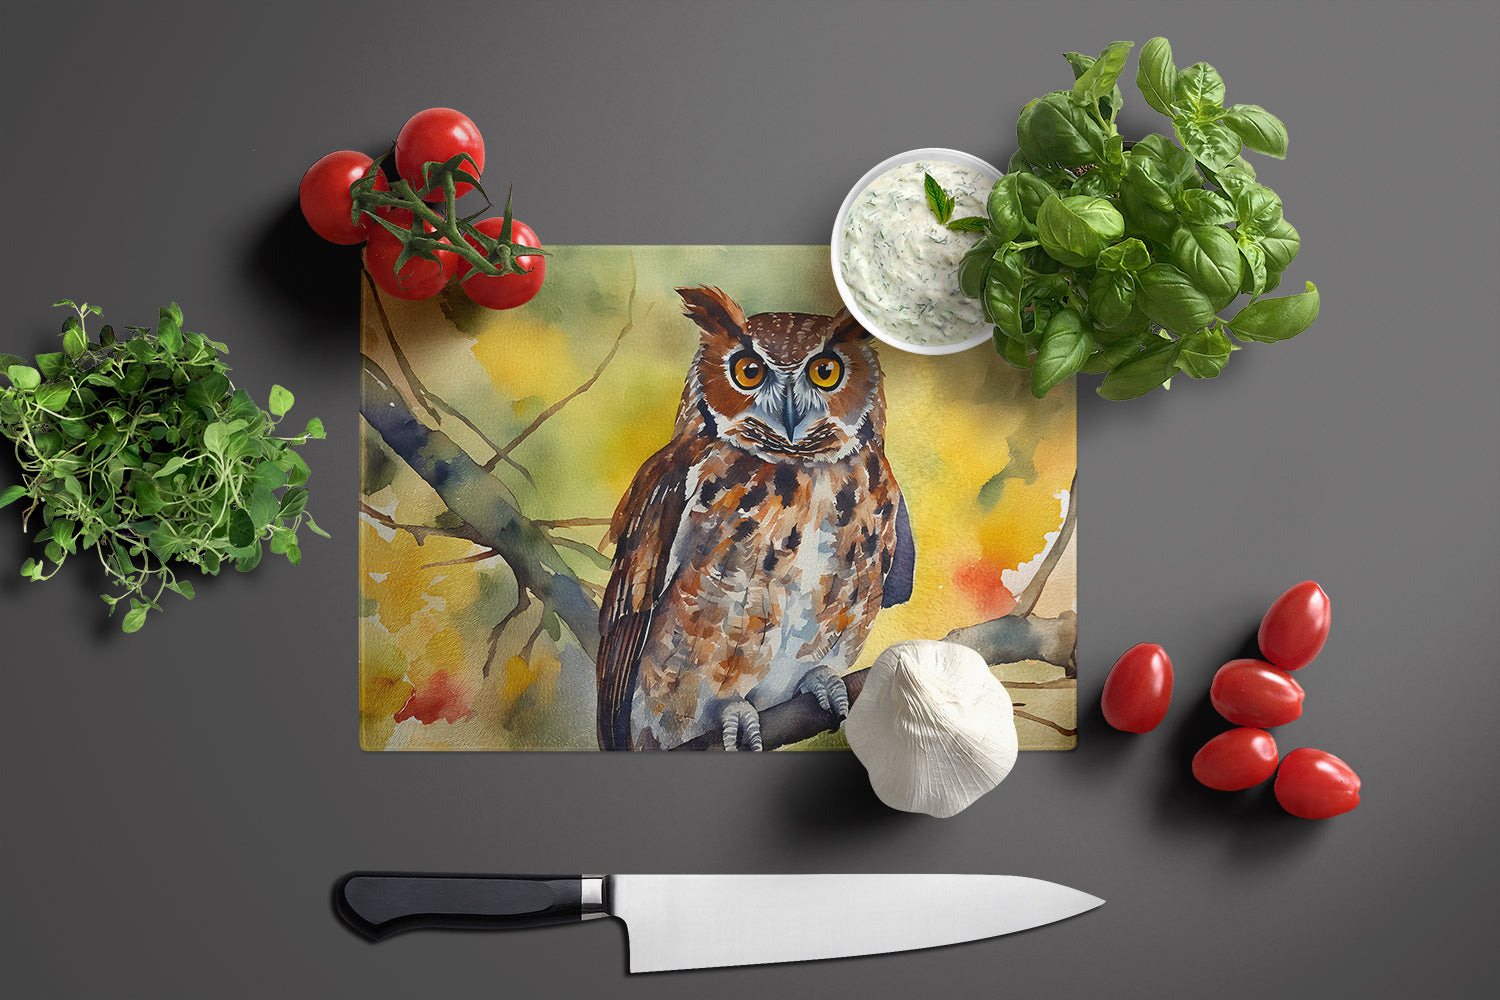 Eastern Screech Owl Glass Cutting Board